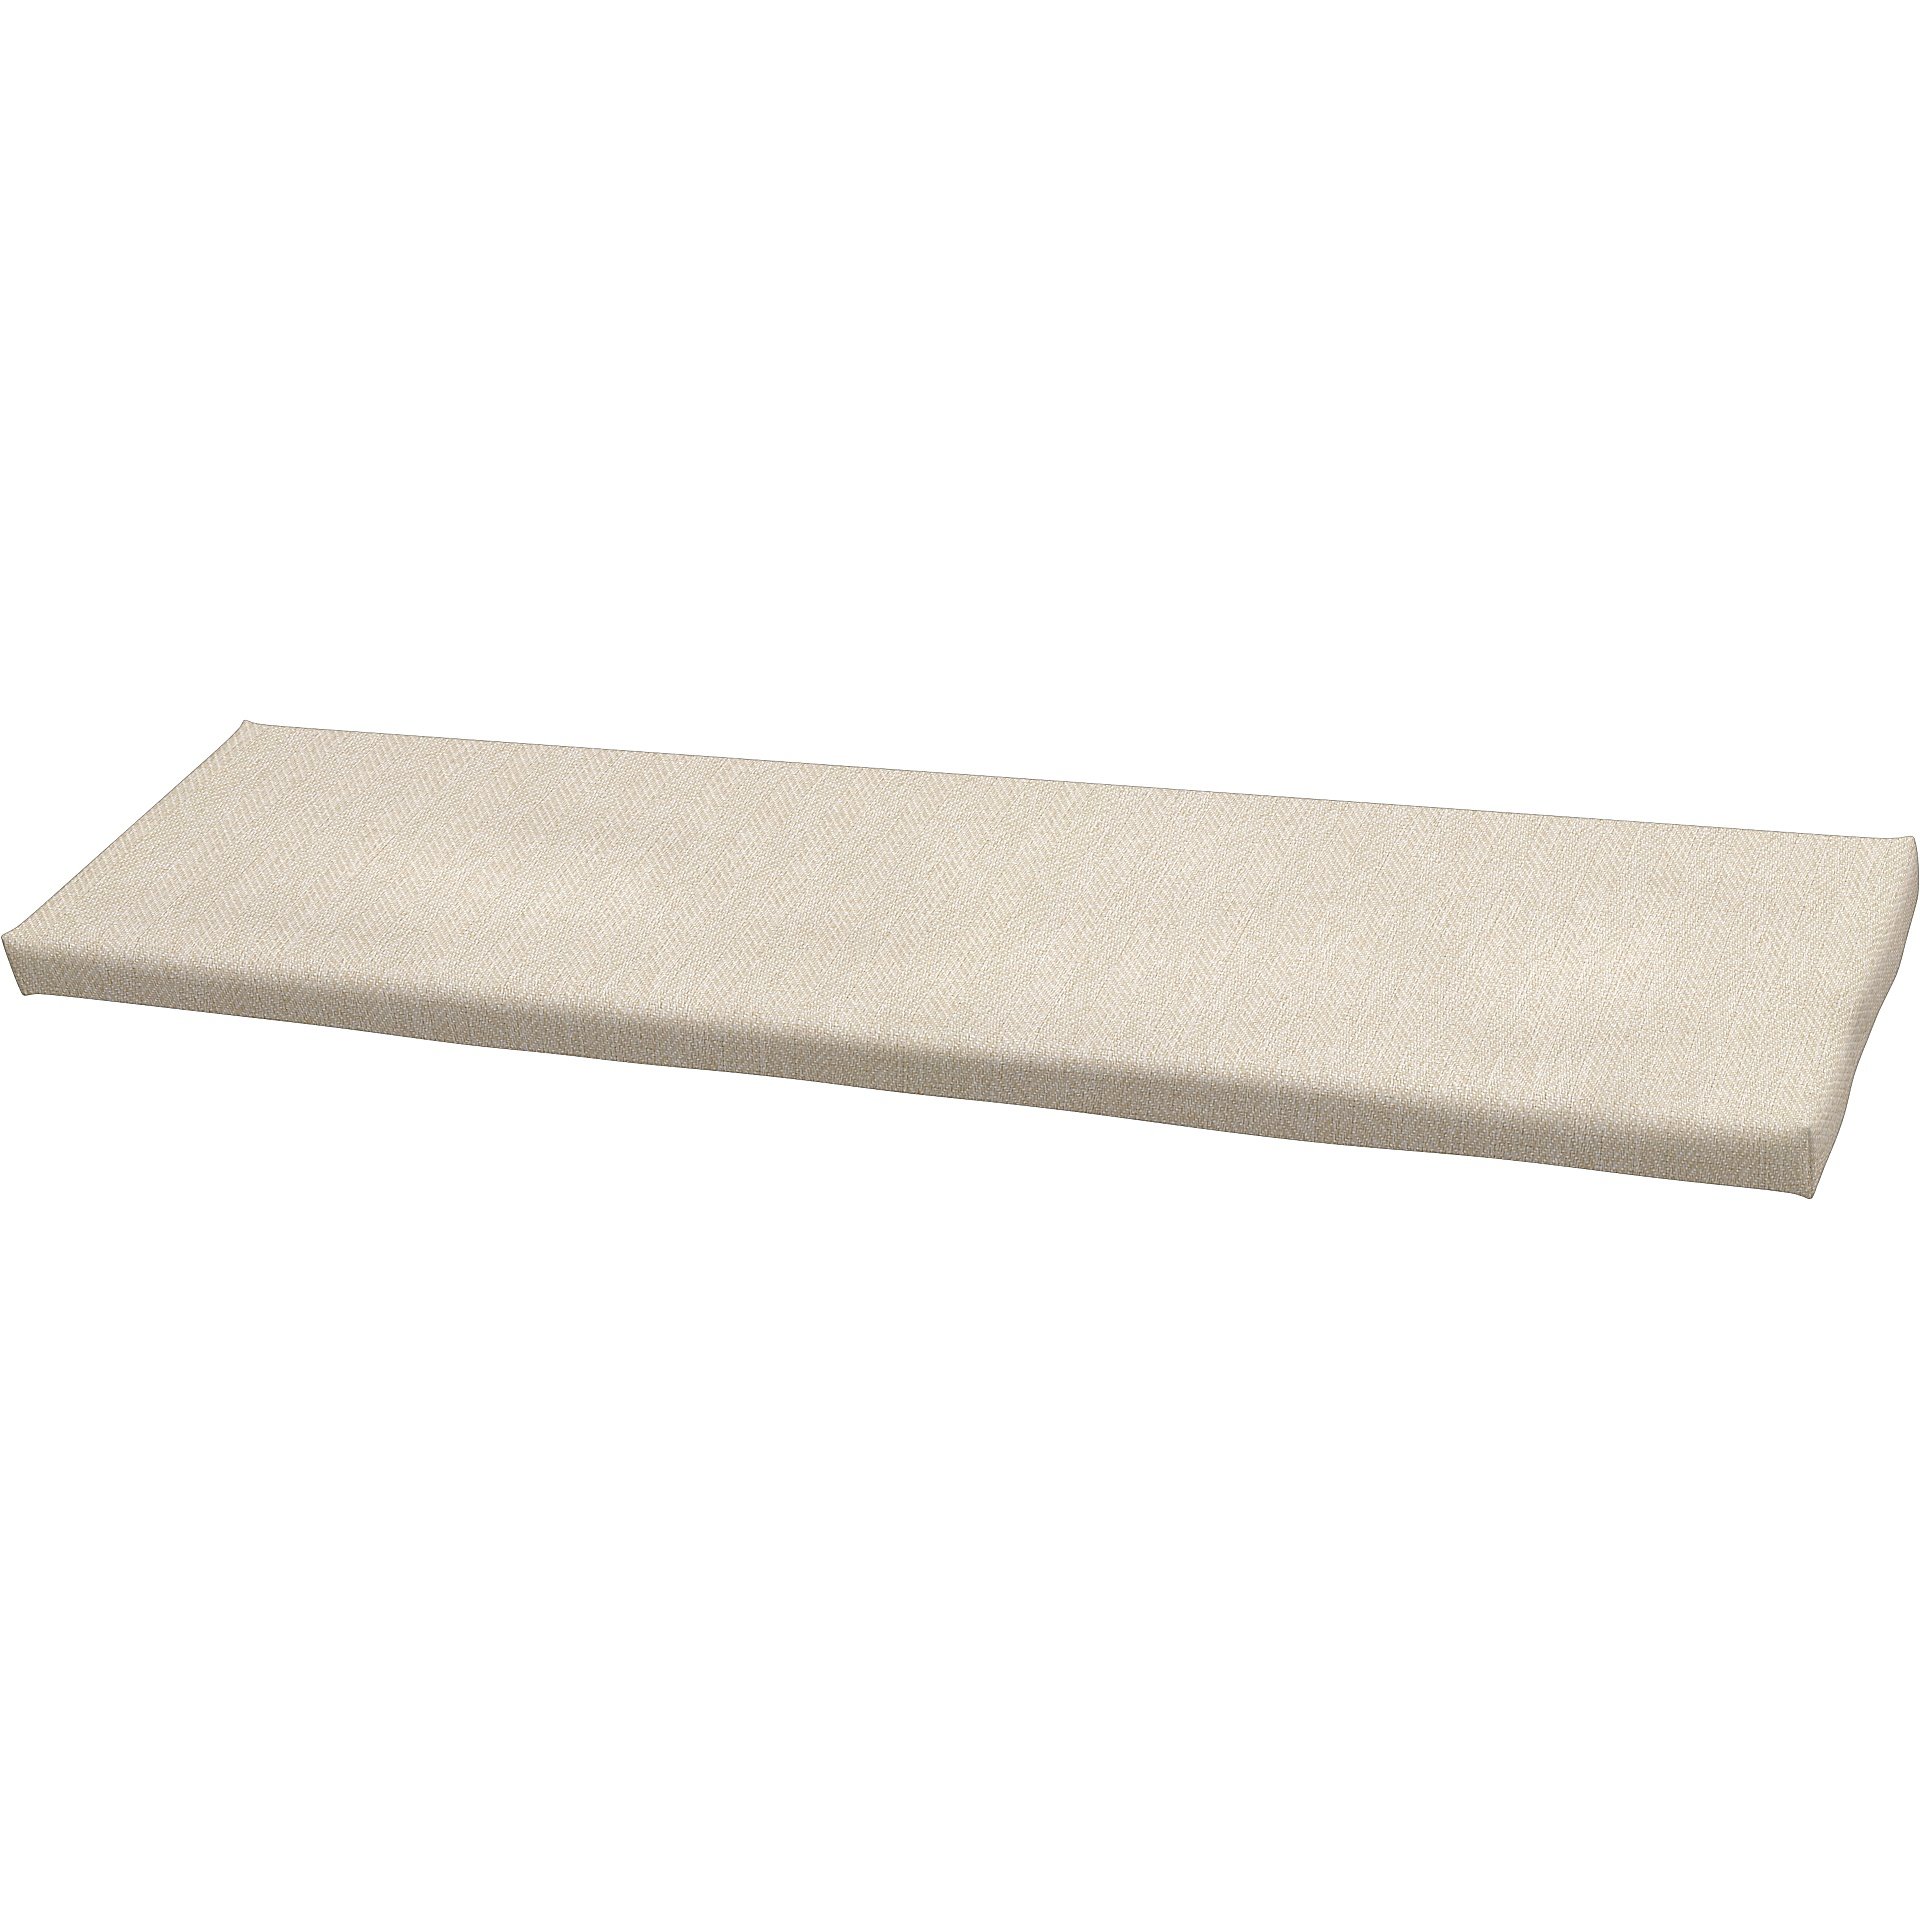 IKEA - Universal bench cushion cover 120x35x3,5 cm, Natural, Boucle & Texture - Bemz